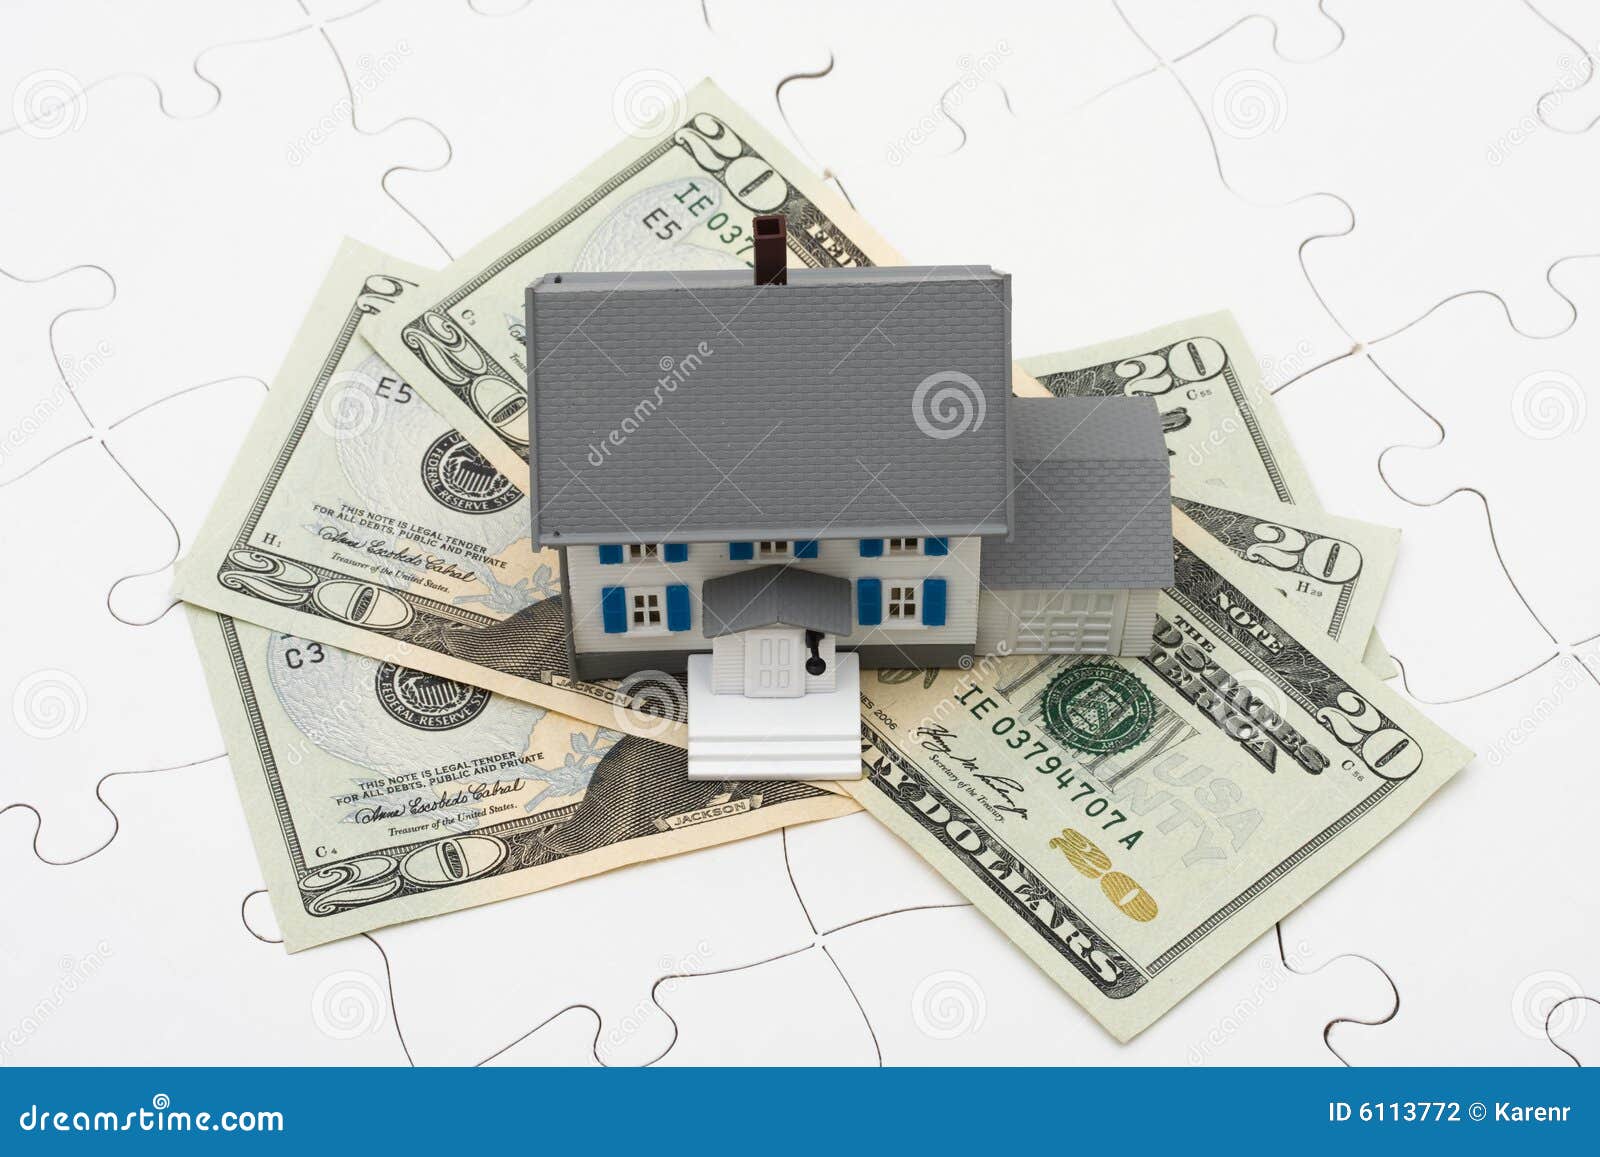 understanding mortgages